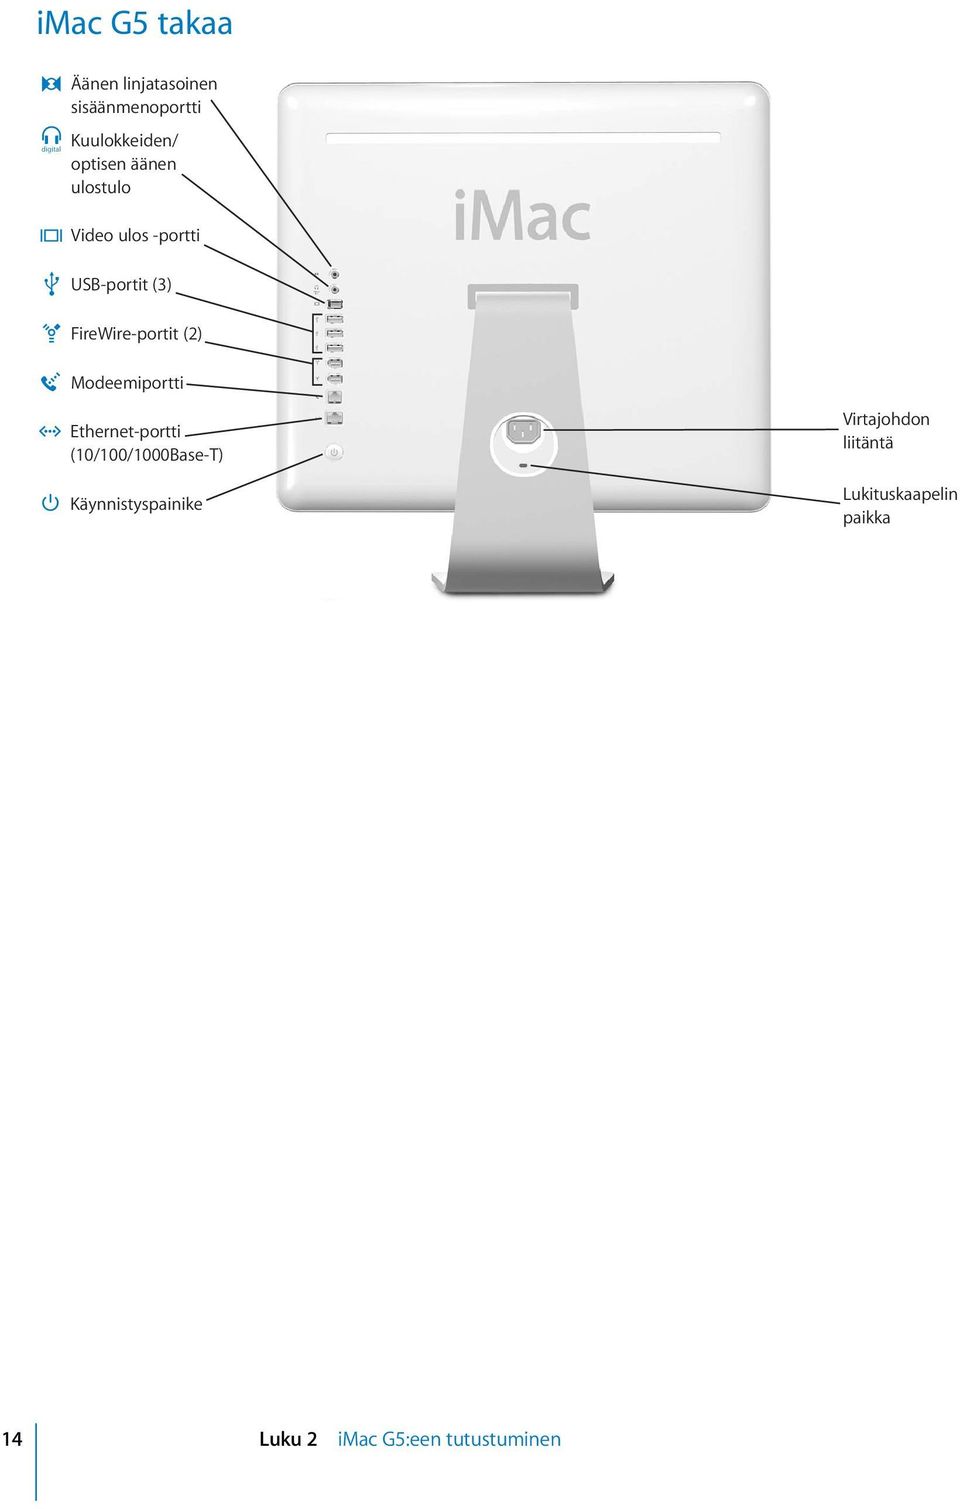 (2) W Modeemiportti G Ethernet-portti (10/100/1000Base-T) Virtajohdon